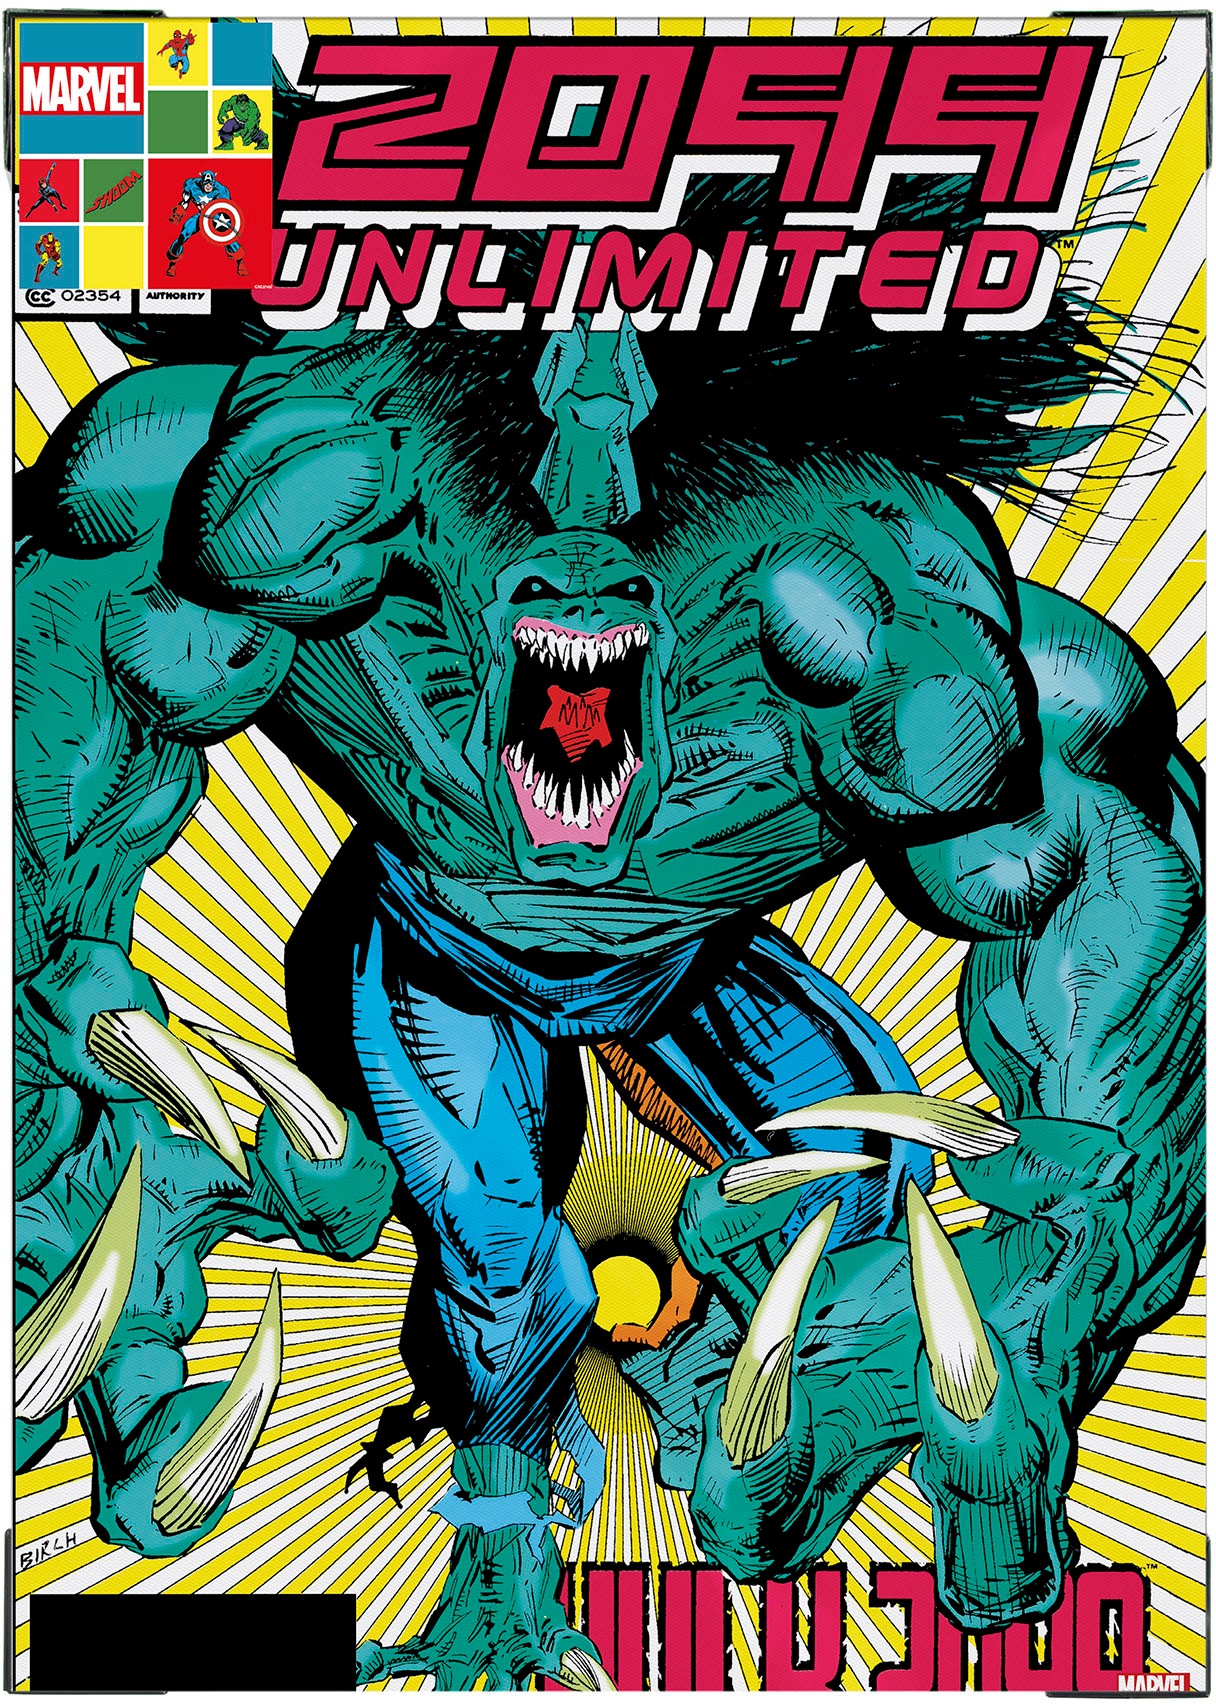 MARVEL Leinwandbild »Hulk 2099 Unlimited«, (1 St.)